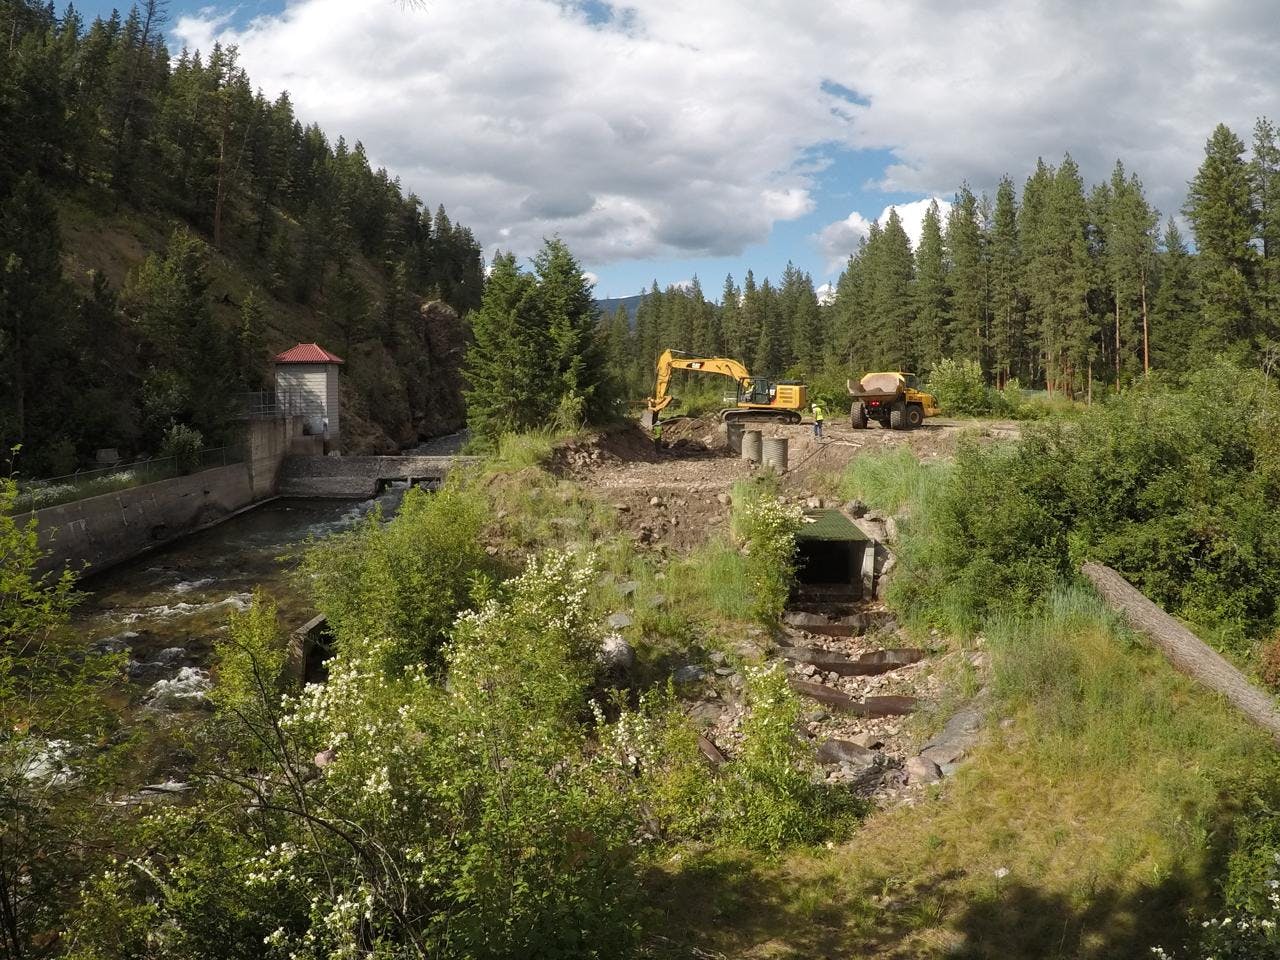 Webcam photo - Dam removal work July 8, 2020